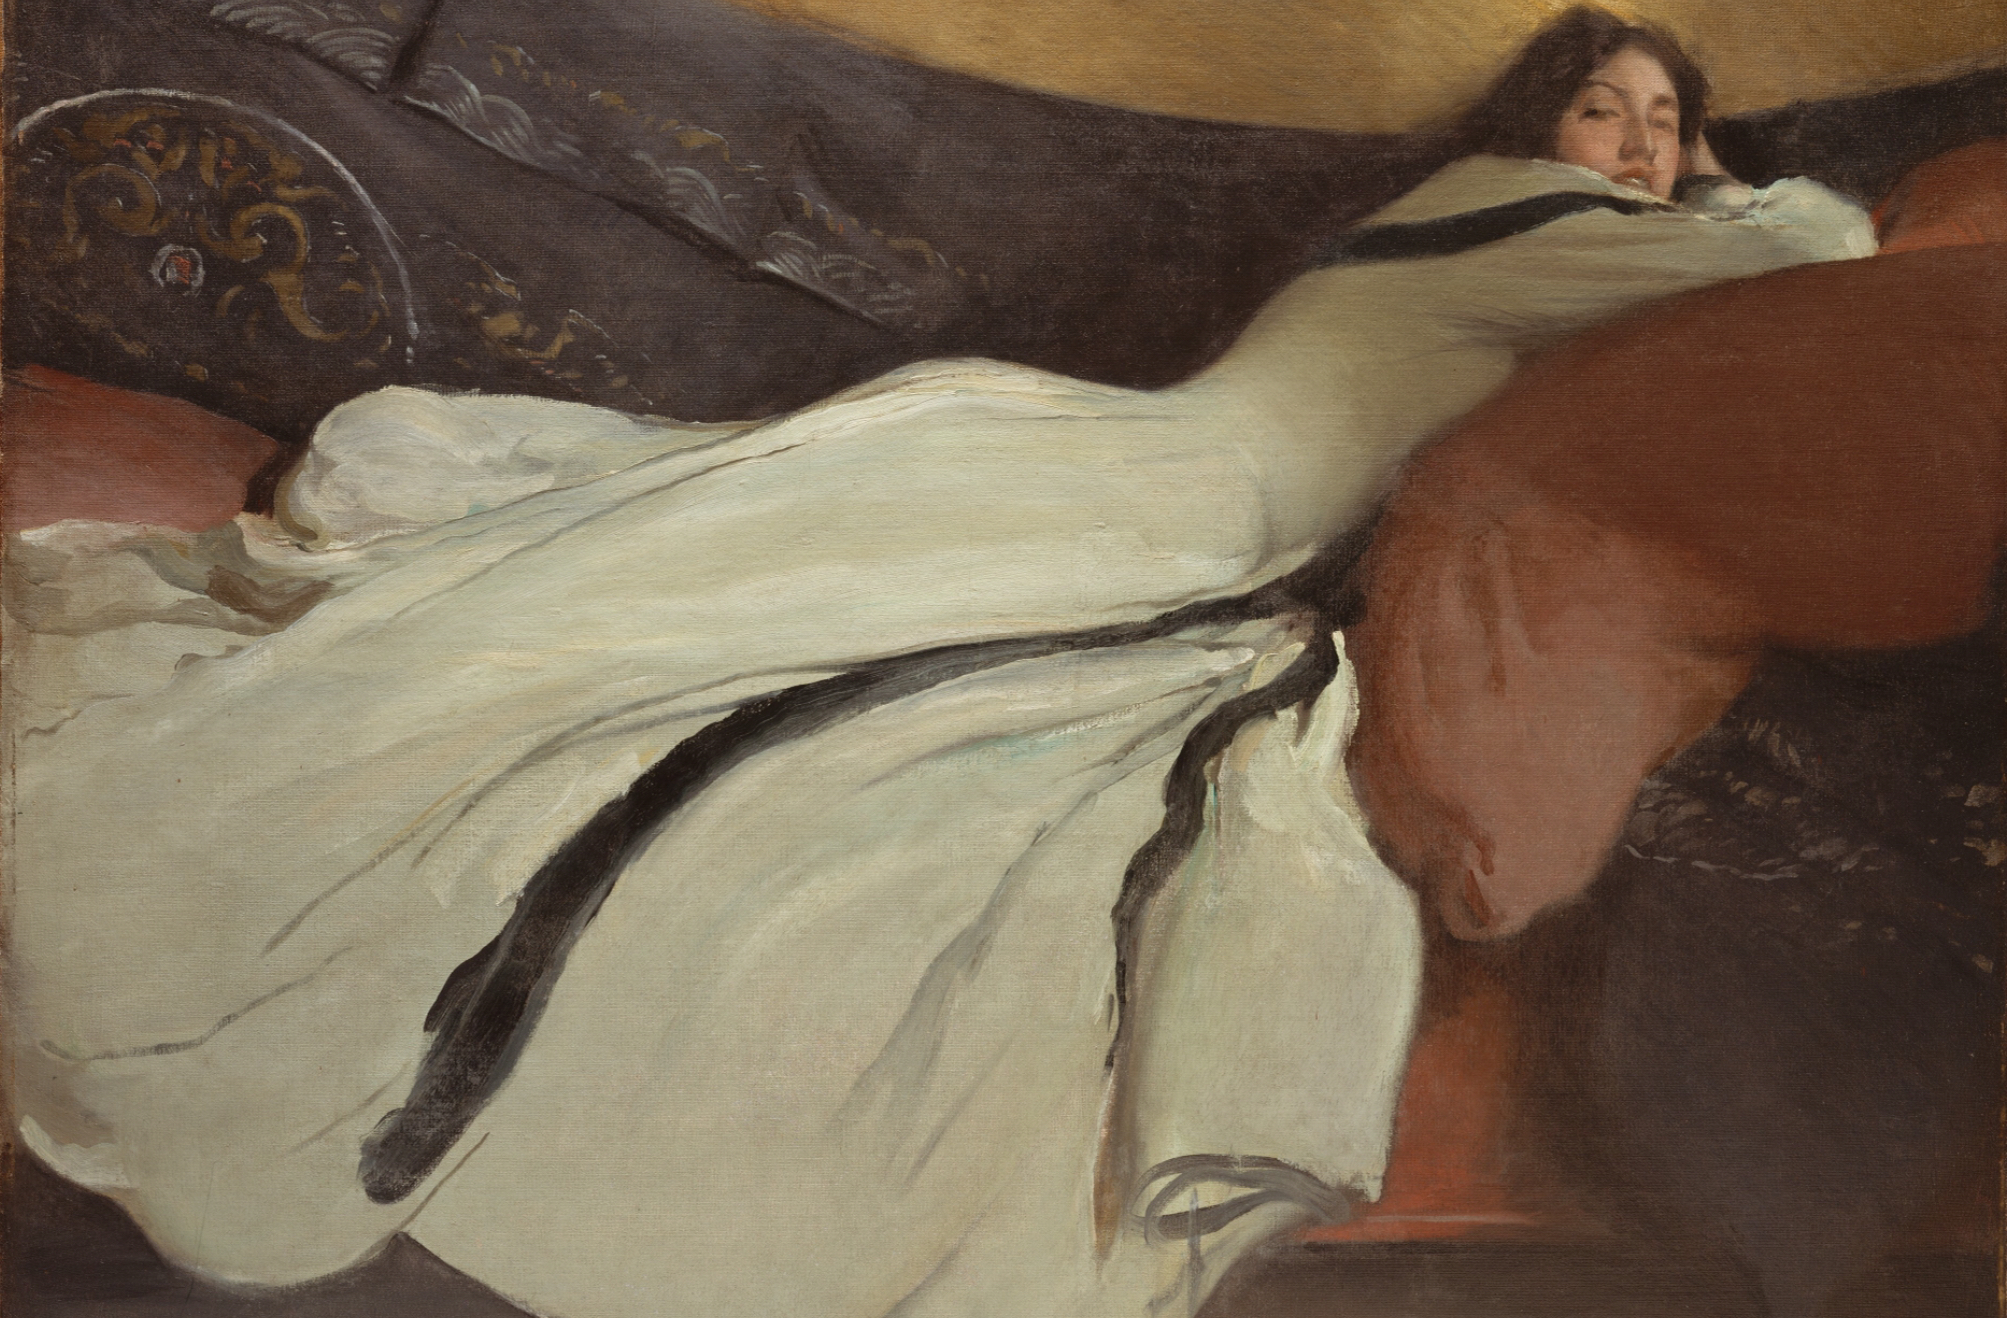 Repose by John White Alexander - 1895 - 132.7 x 161.6 cm Metropolitan Museum of Art